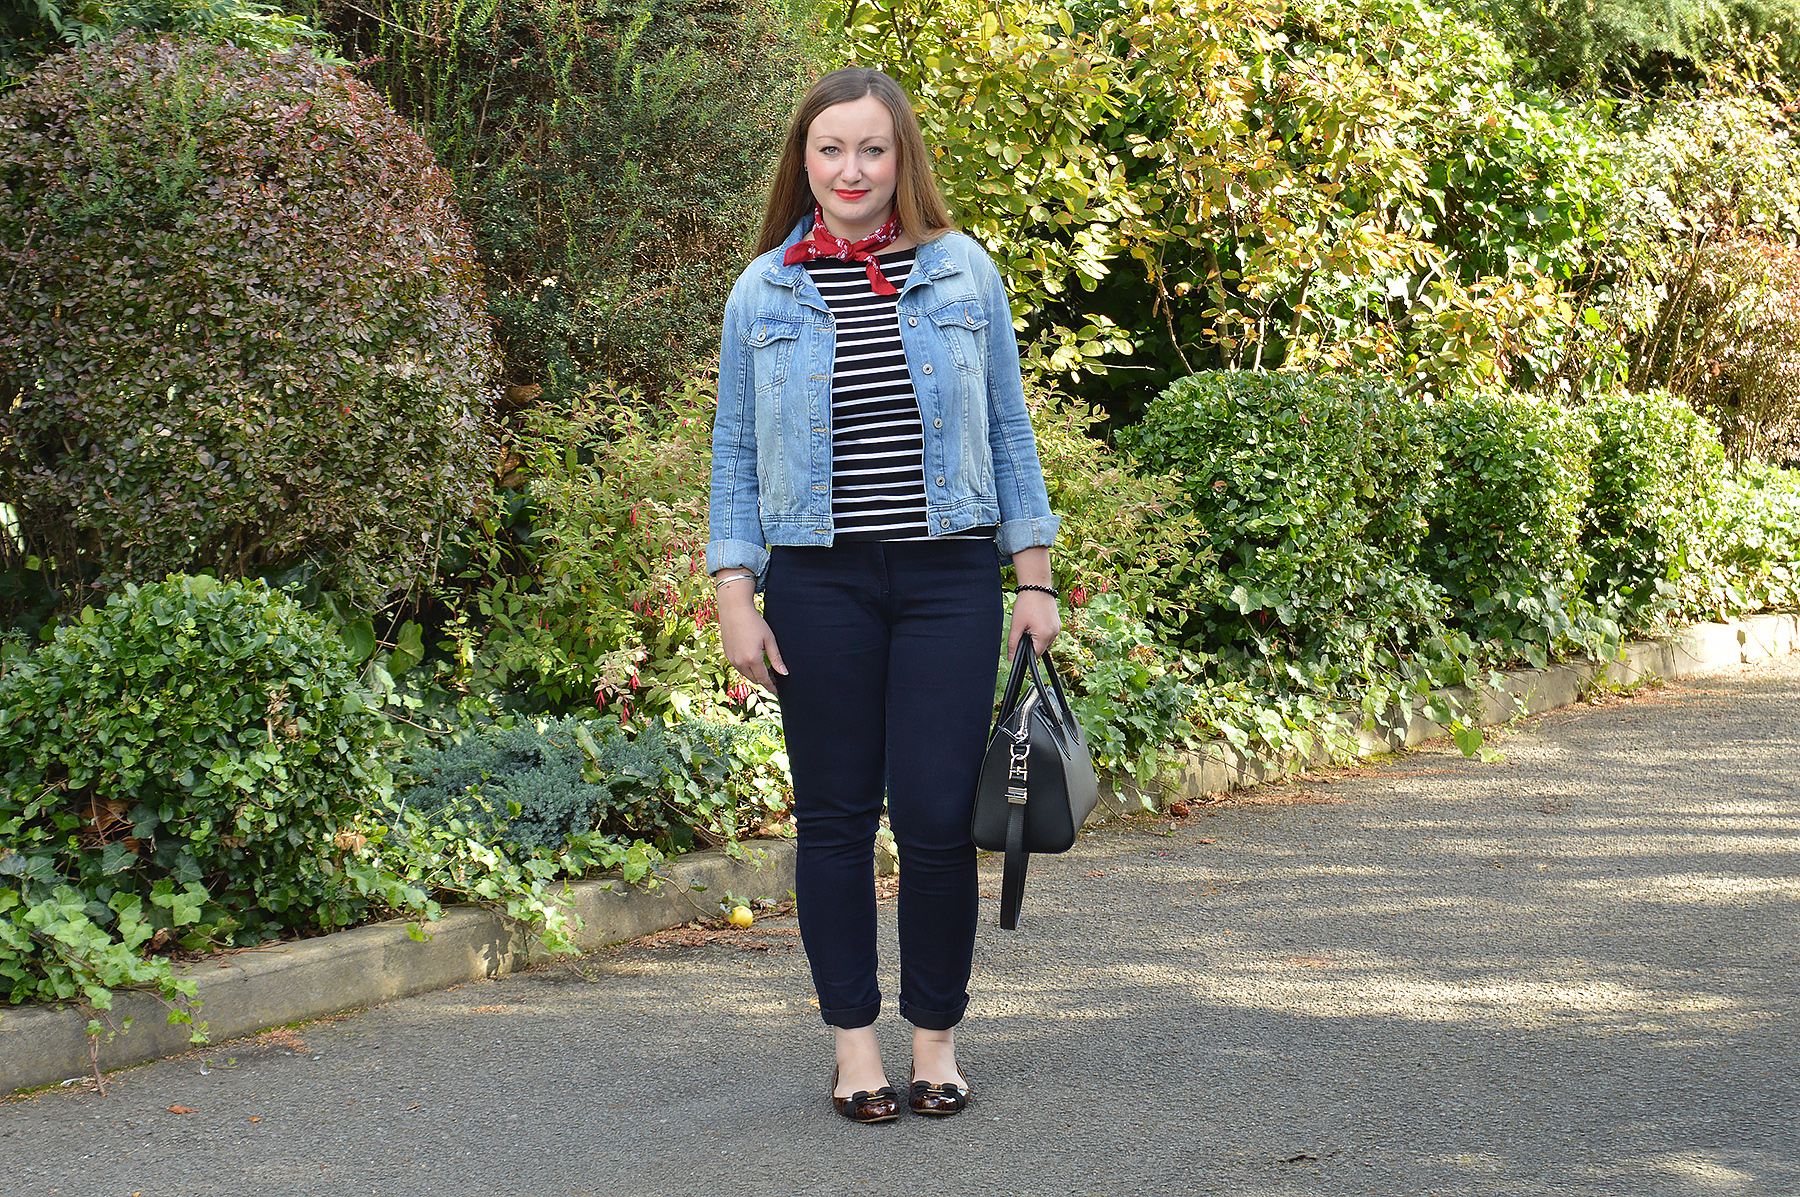 Autumn Stripes Outfit and Zara Jacket